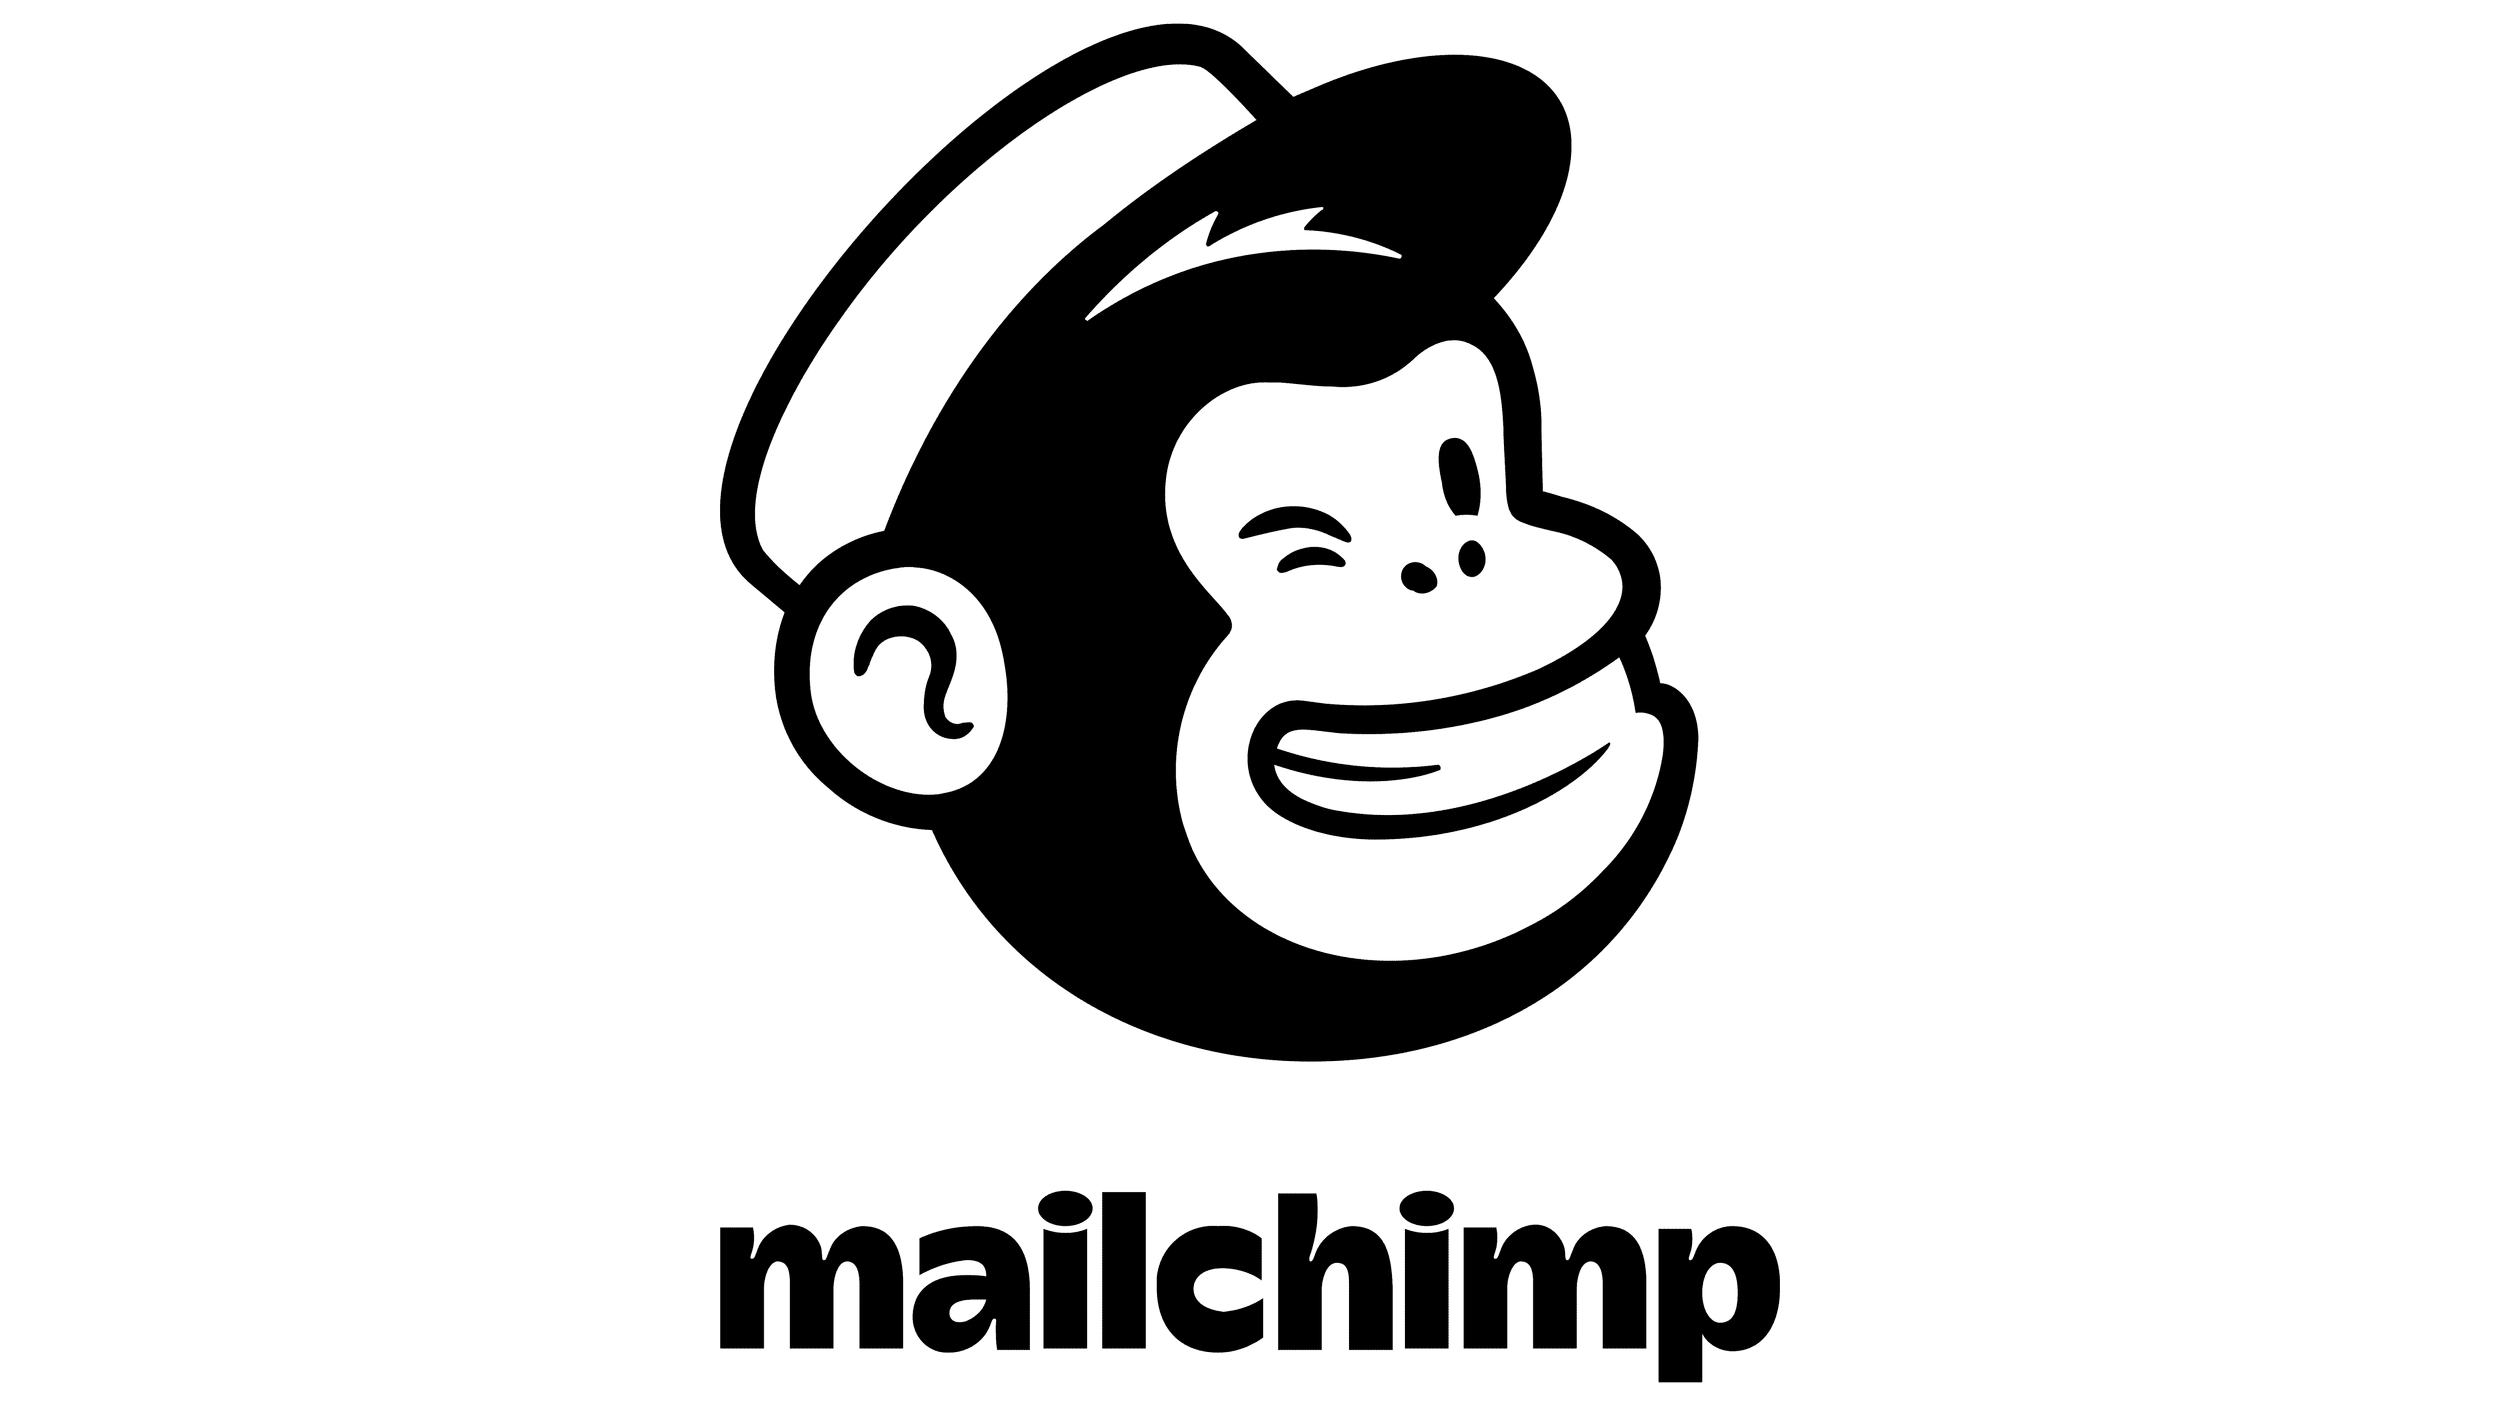 Mailchimp-logo-2018.png